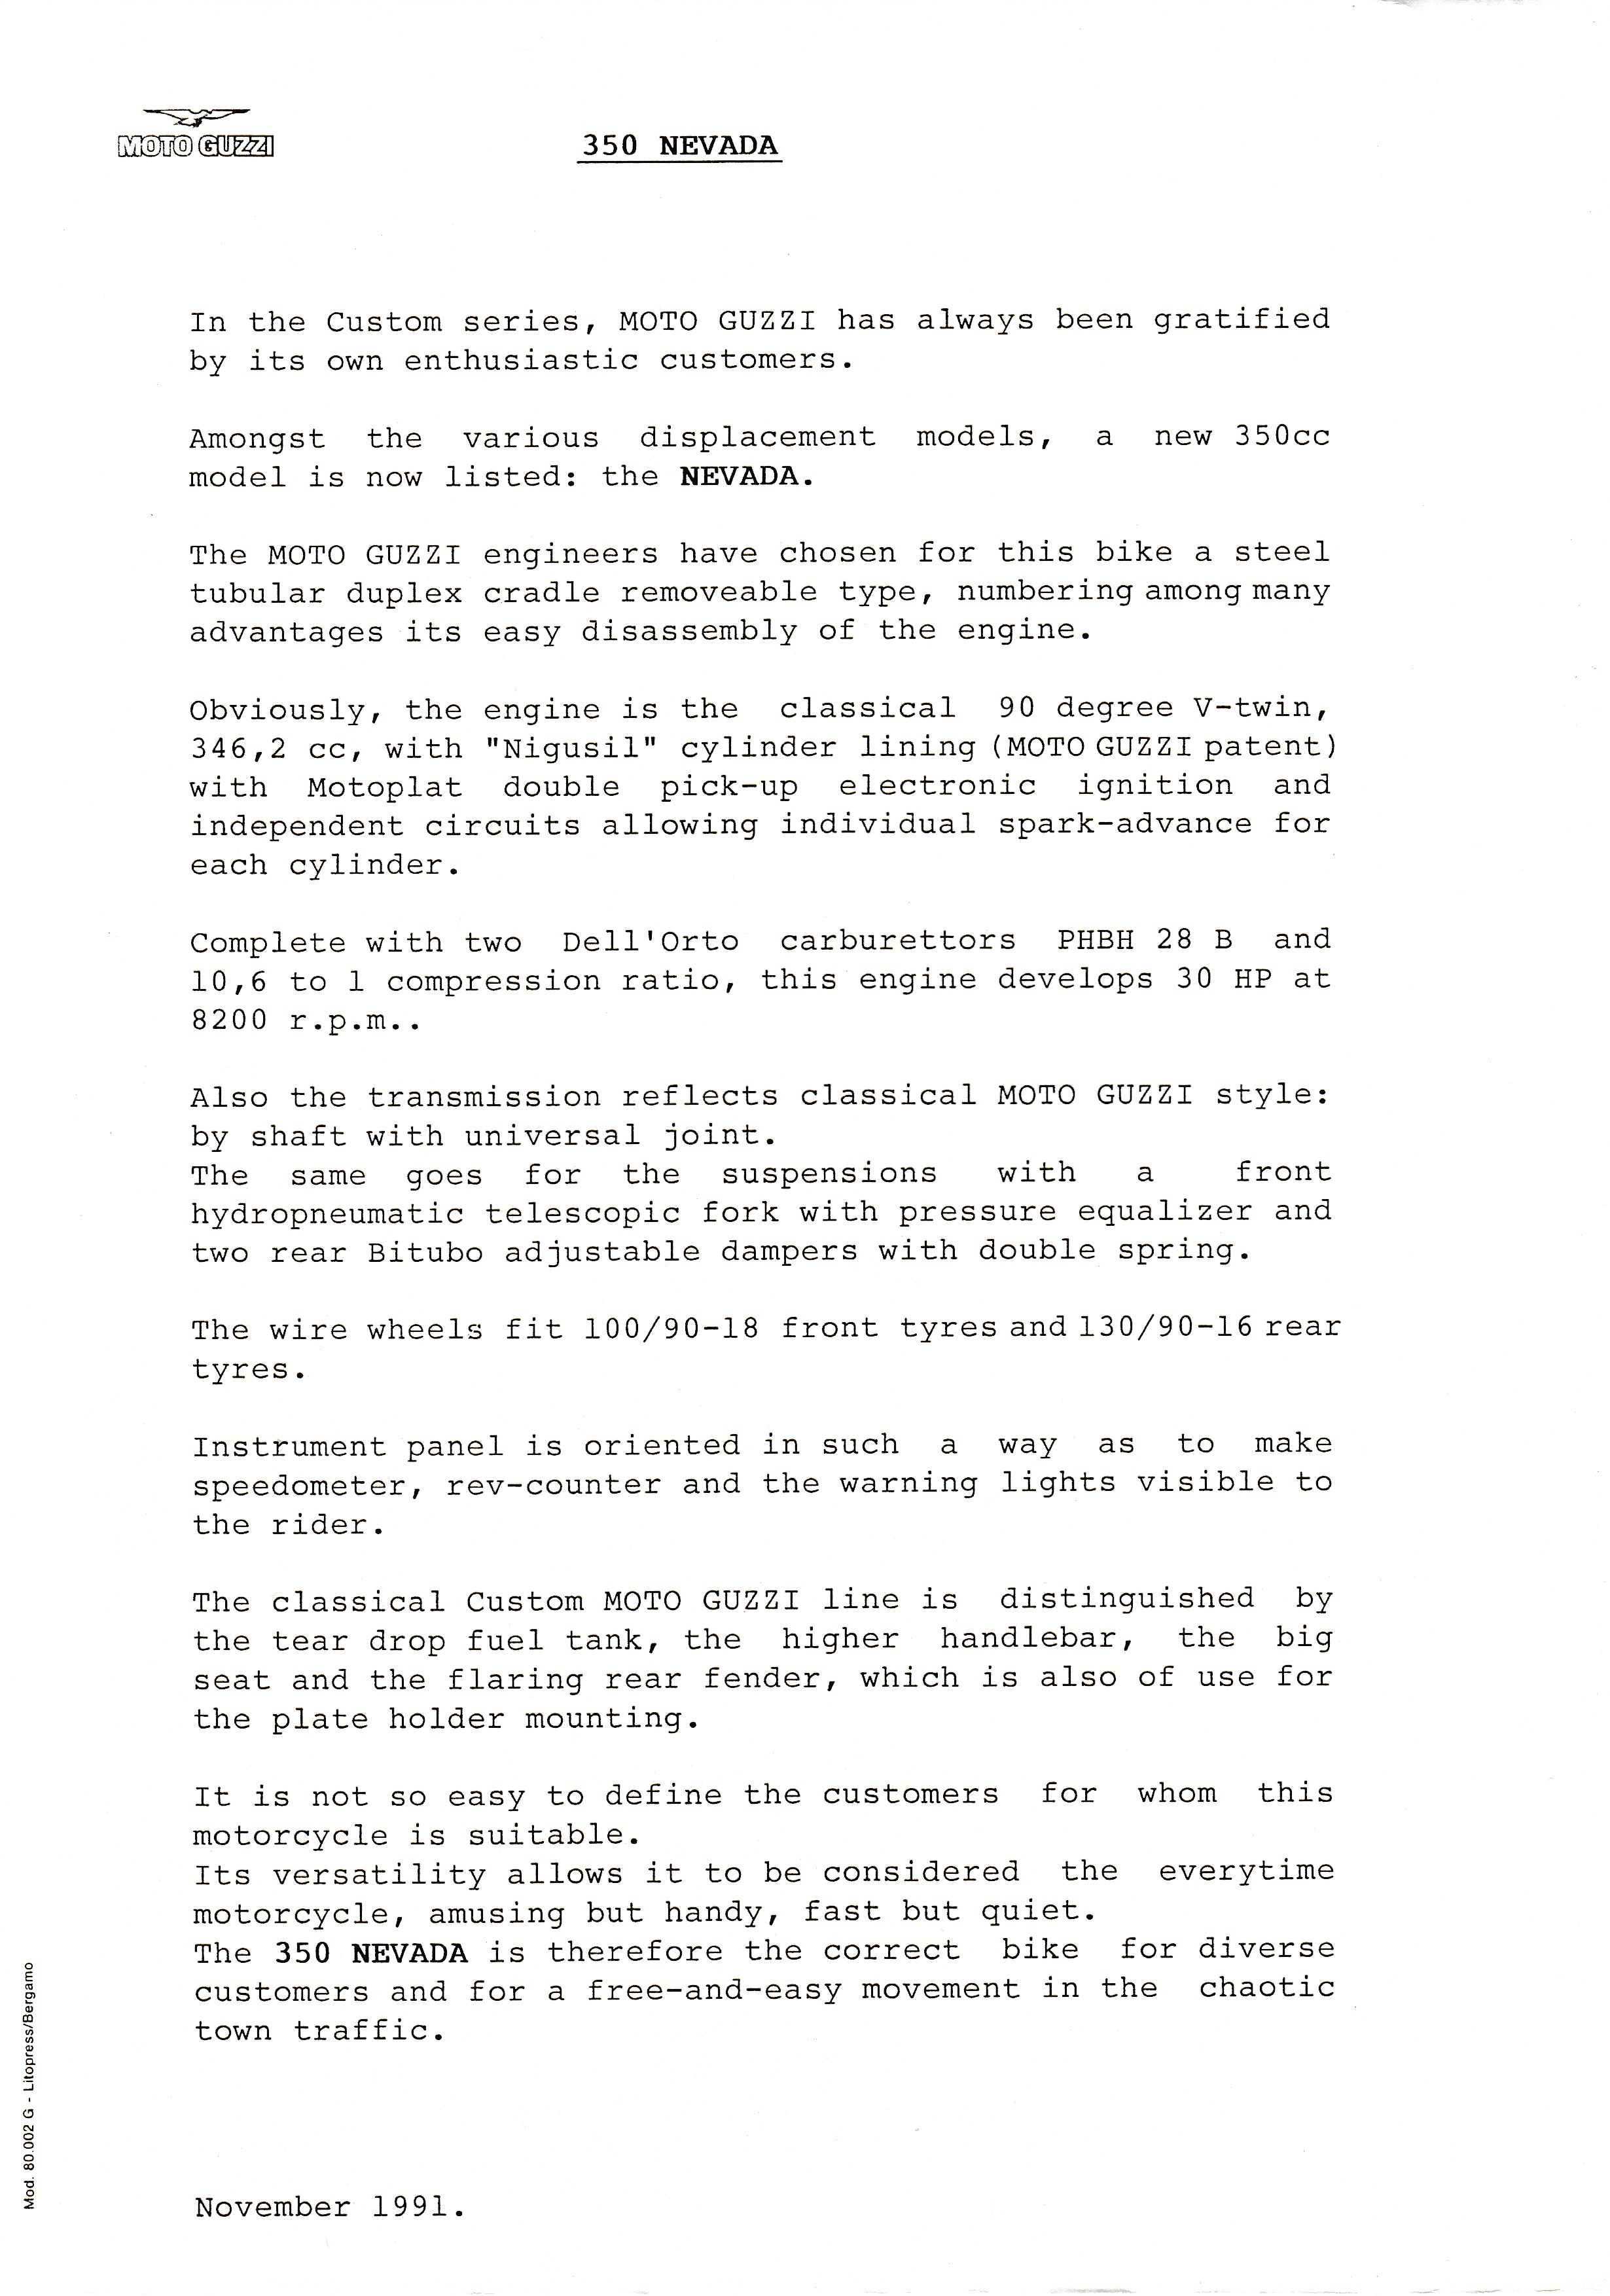 Press release - Moto Guzzi 350 Nevada (1991 November)